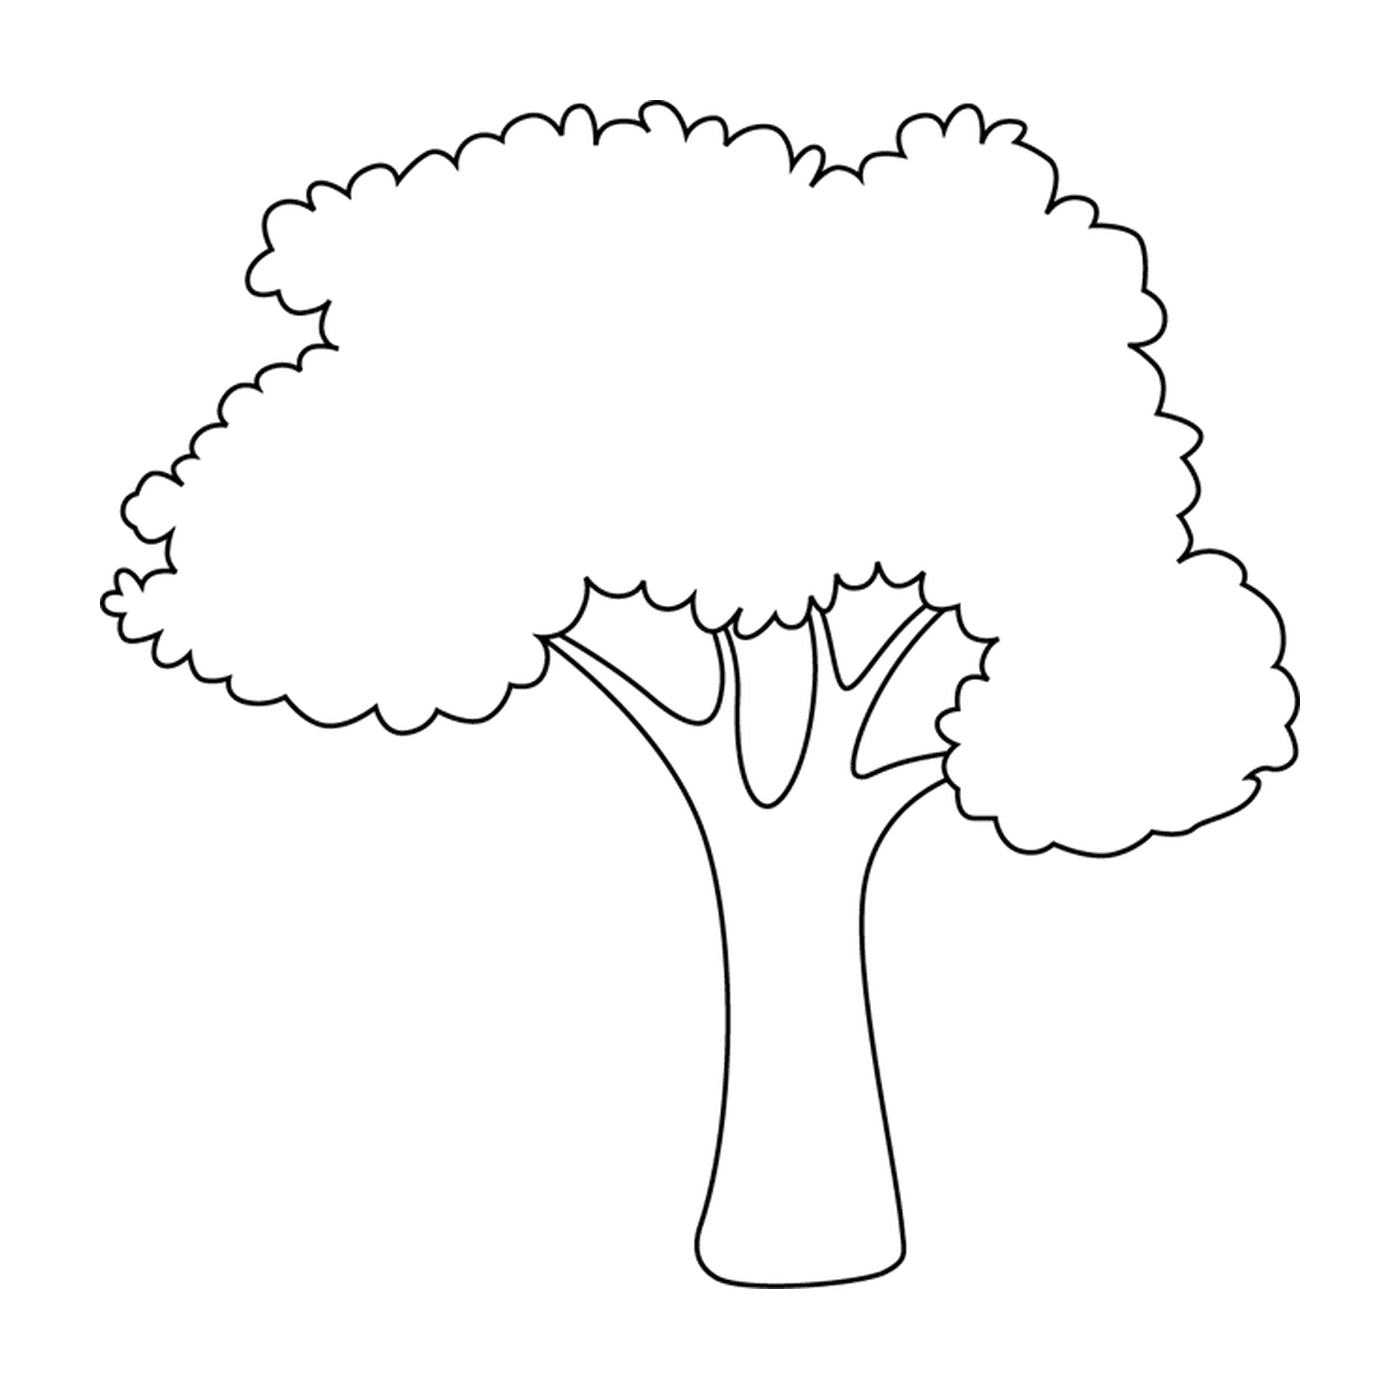   Un arbre facile et simple 